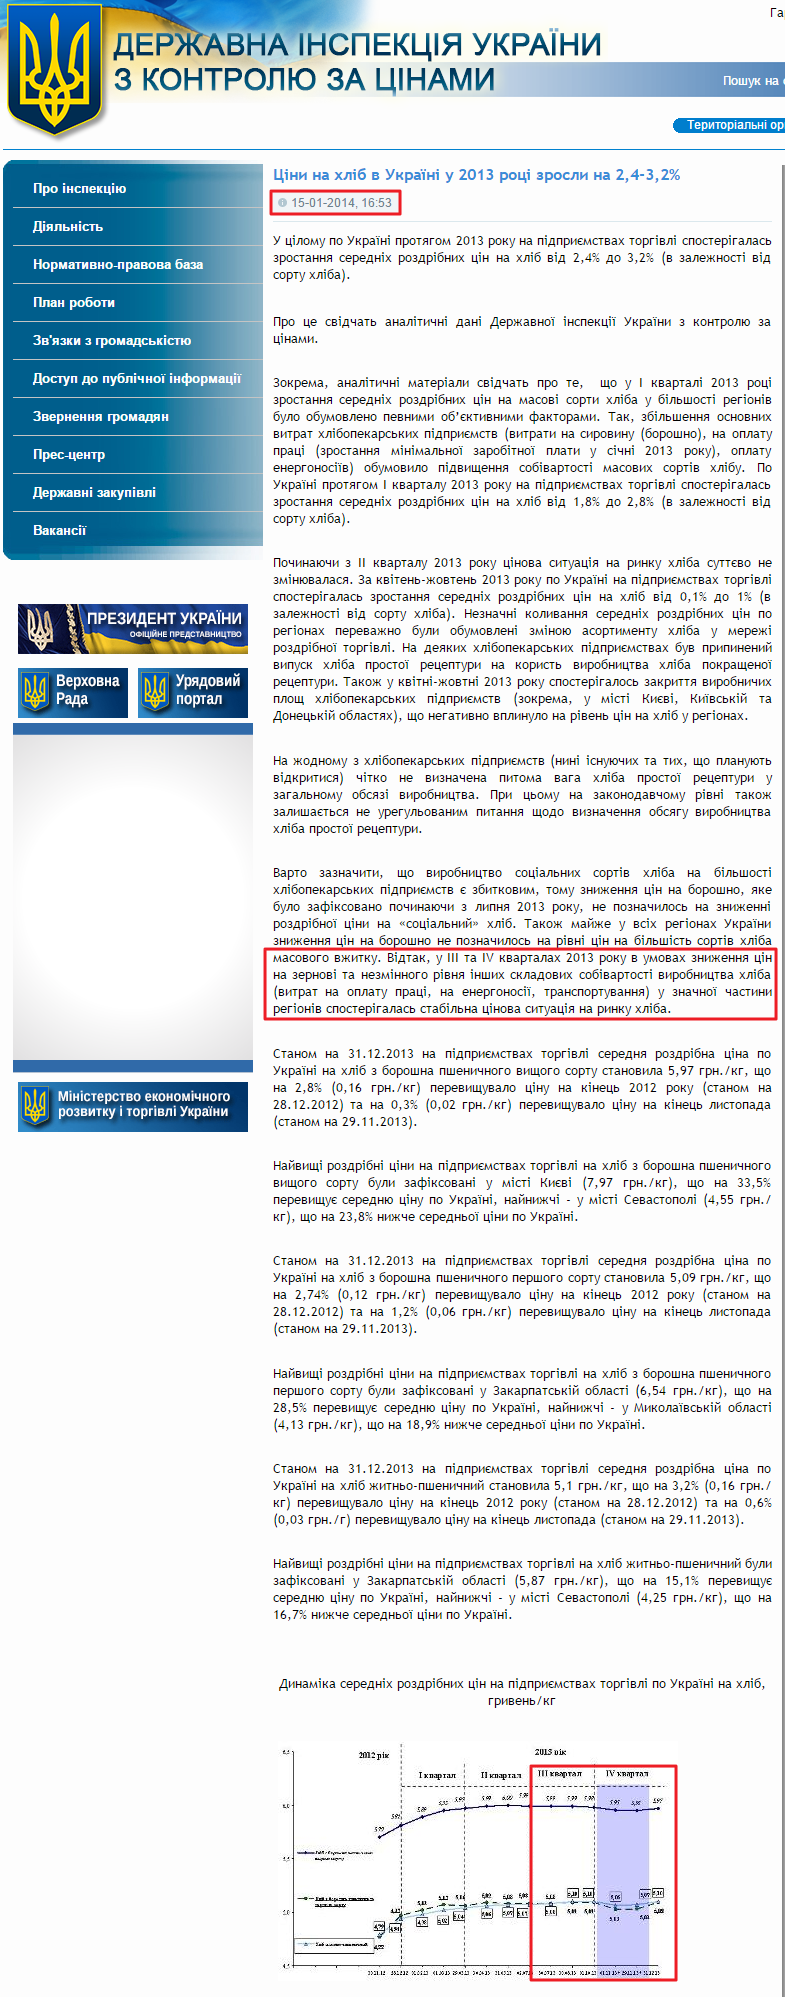 http://dci.gov.ua/news/324-cni-na-hlb-po-regonah-ukrayini-u-2013-roc-rznilis-na-30-60.html